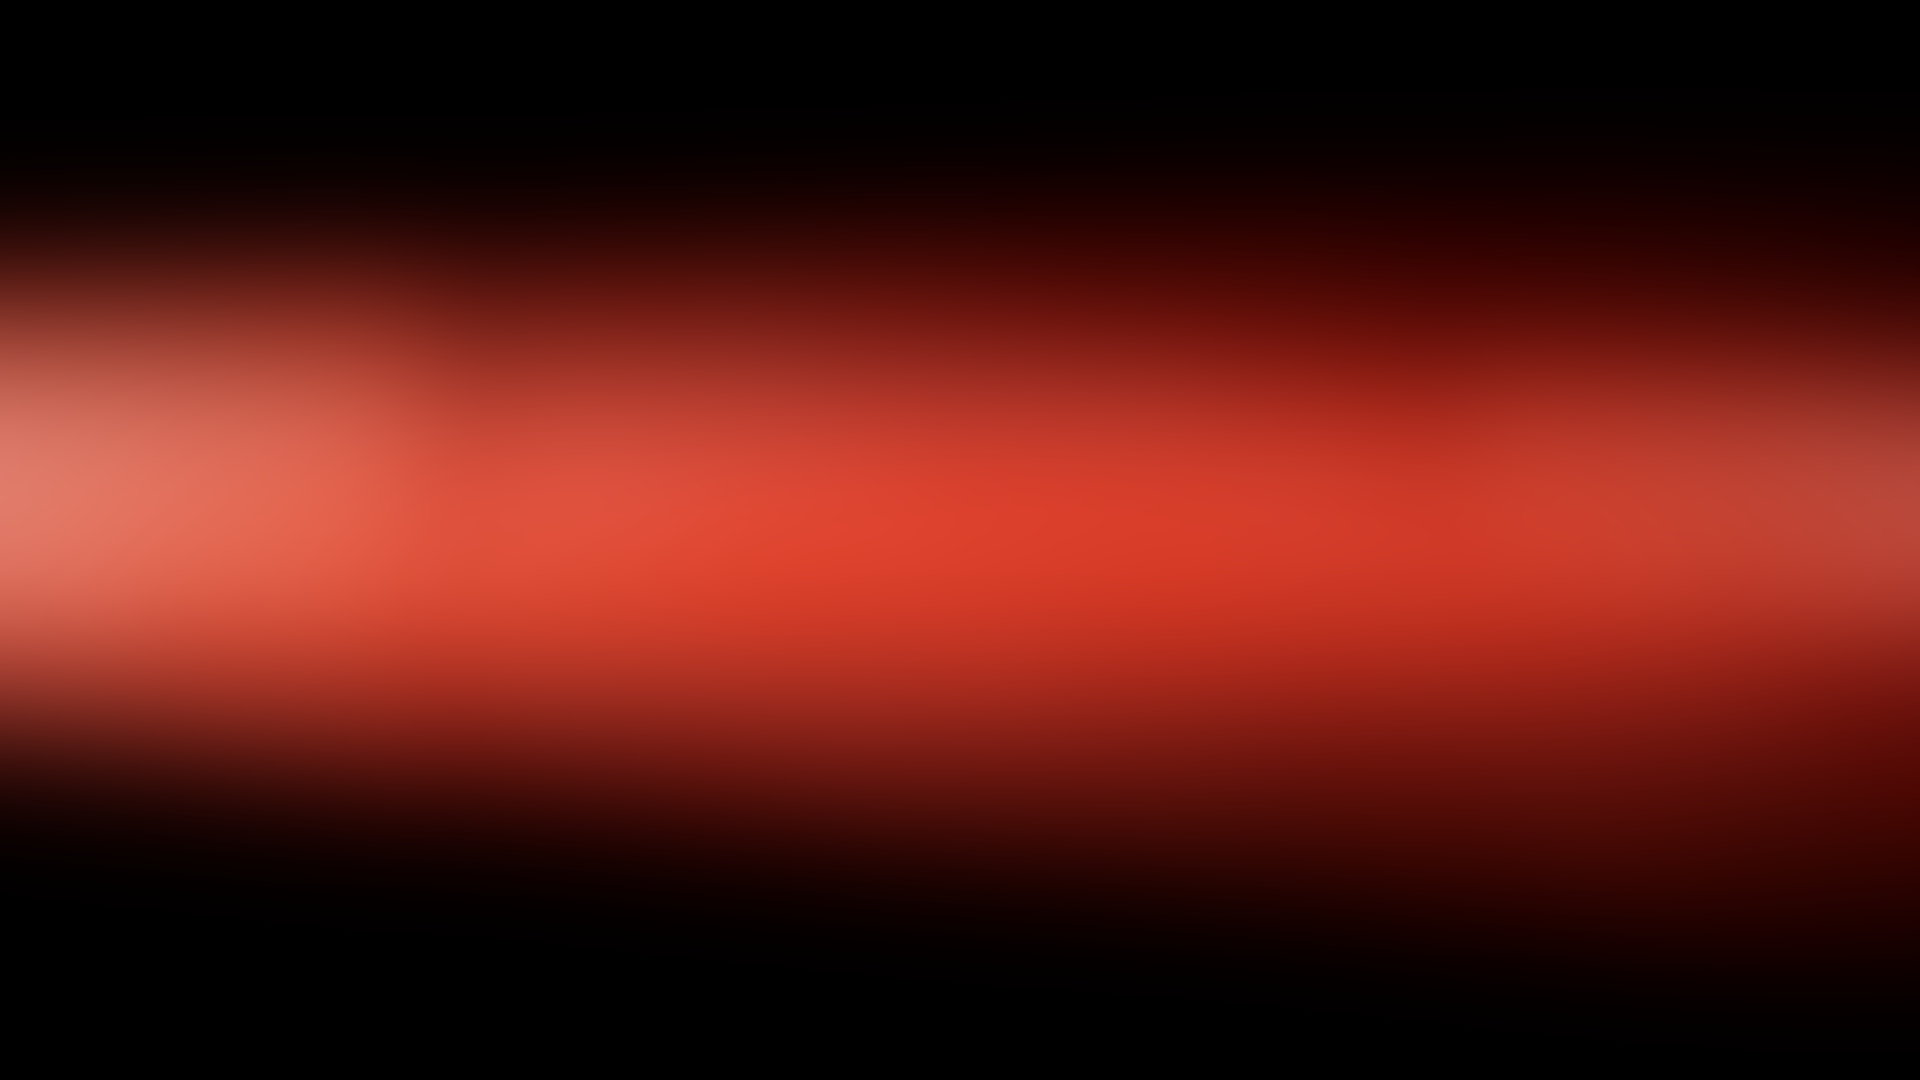 Red horizontal blurry desktop background wallpapers 